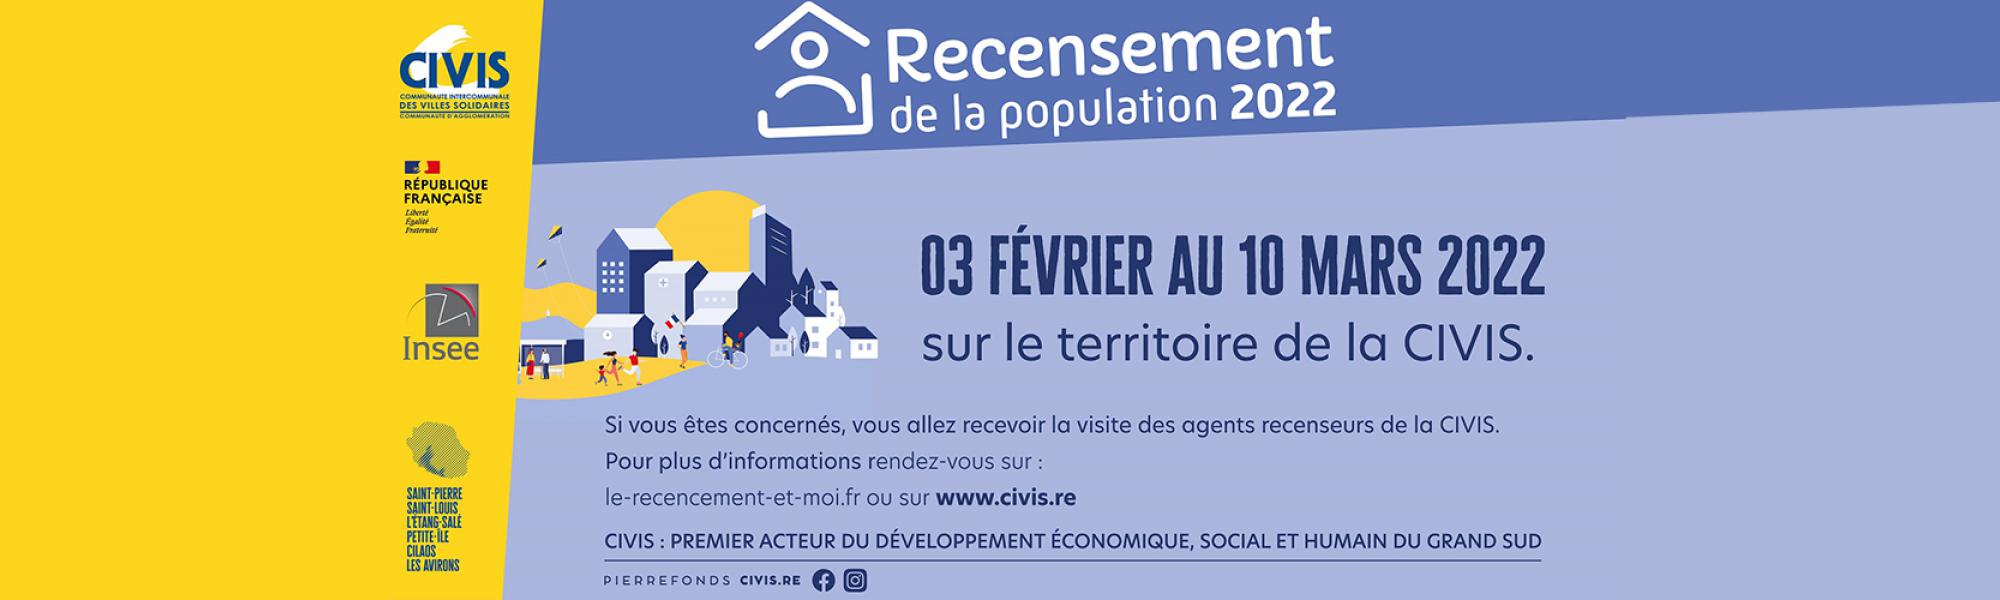 Bandeau recensement 2022